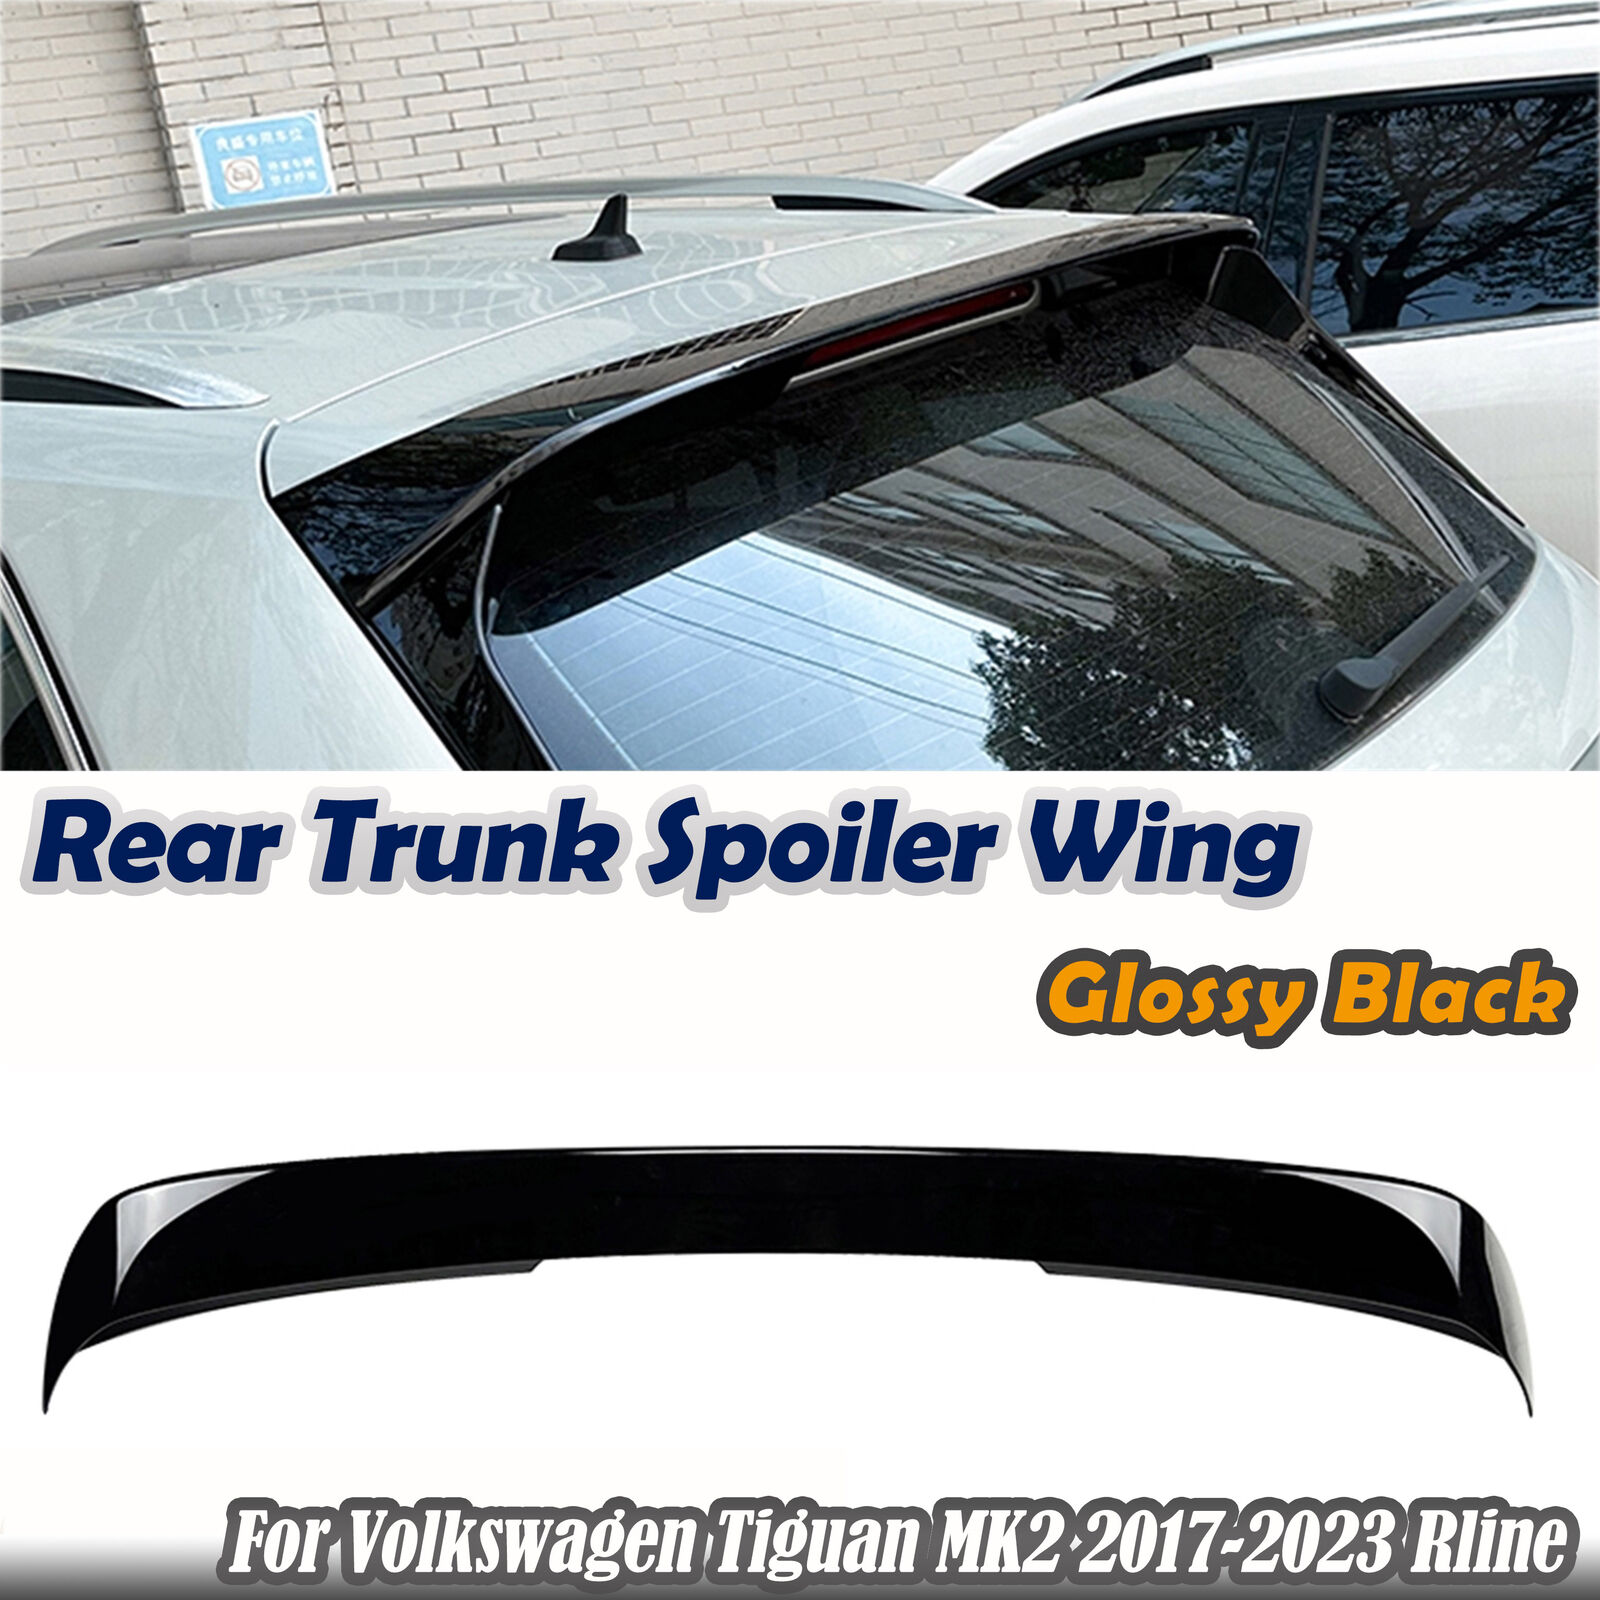 For Volkswagen Tiguan MK2 2017-2023 Rline Rear Trunk Splitter Spoiler Wing Black